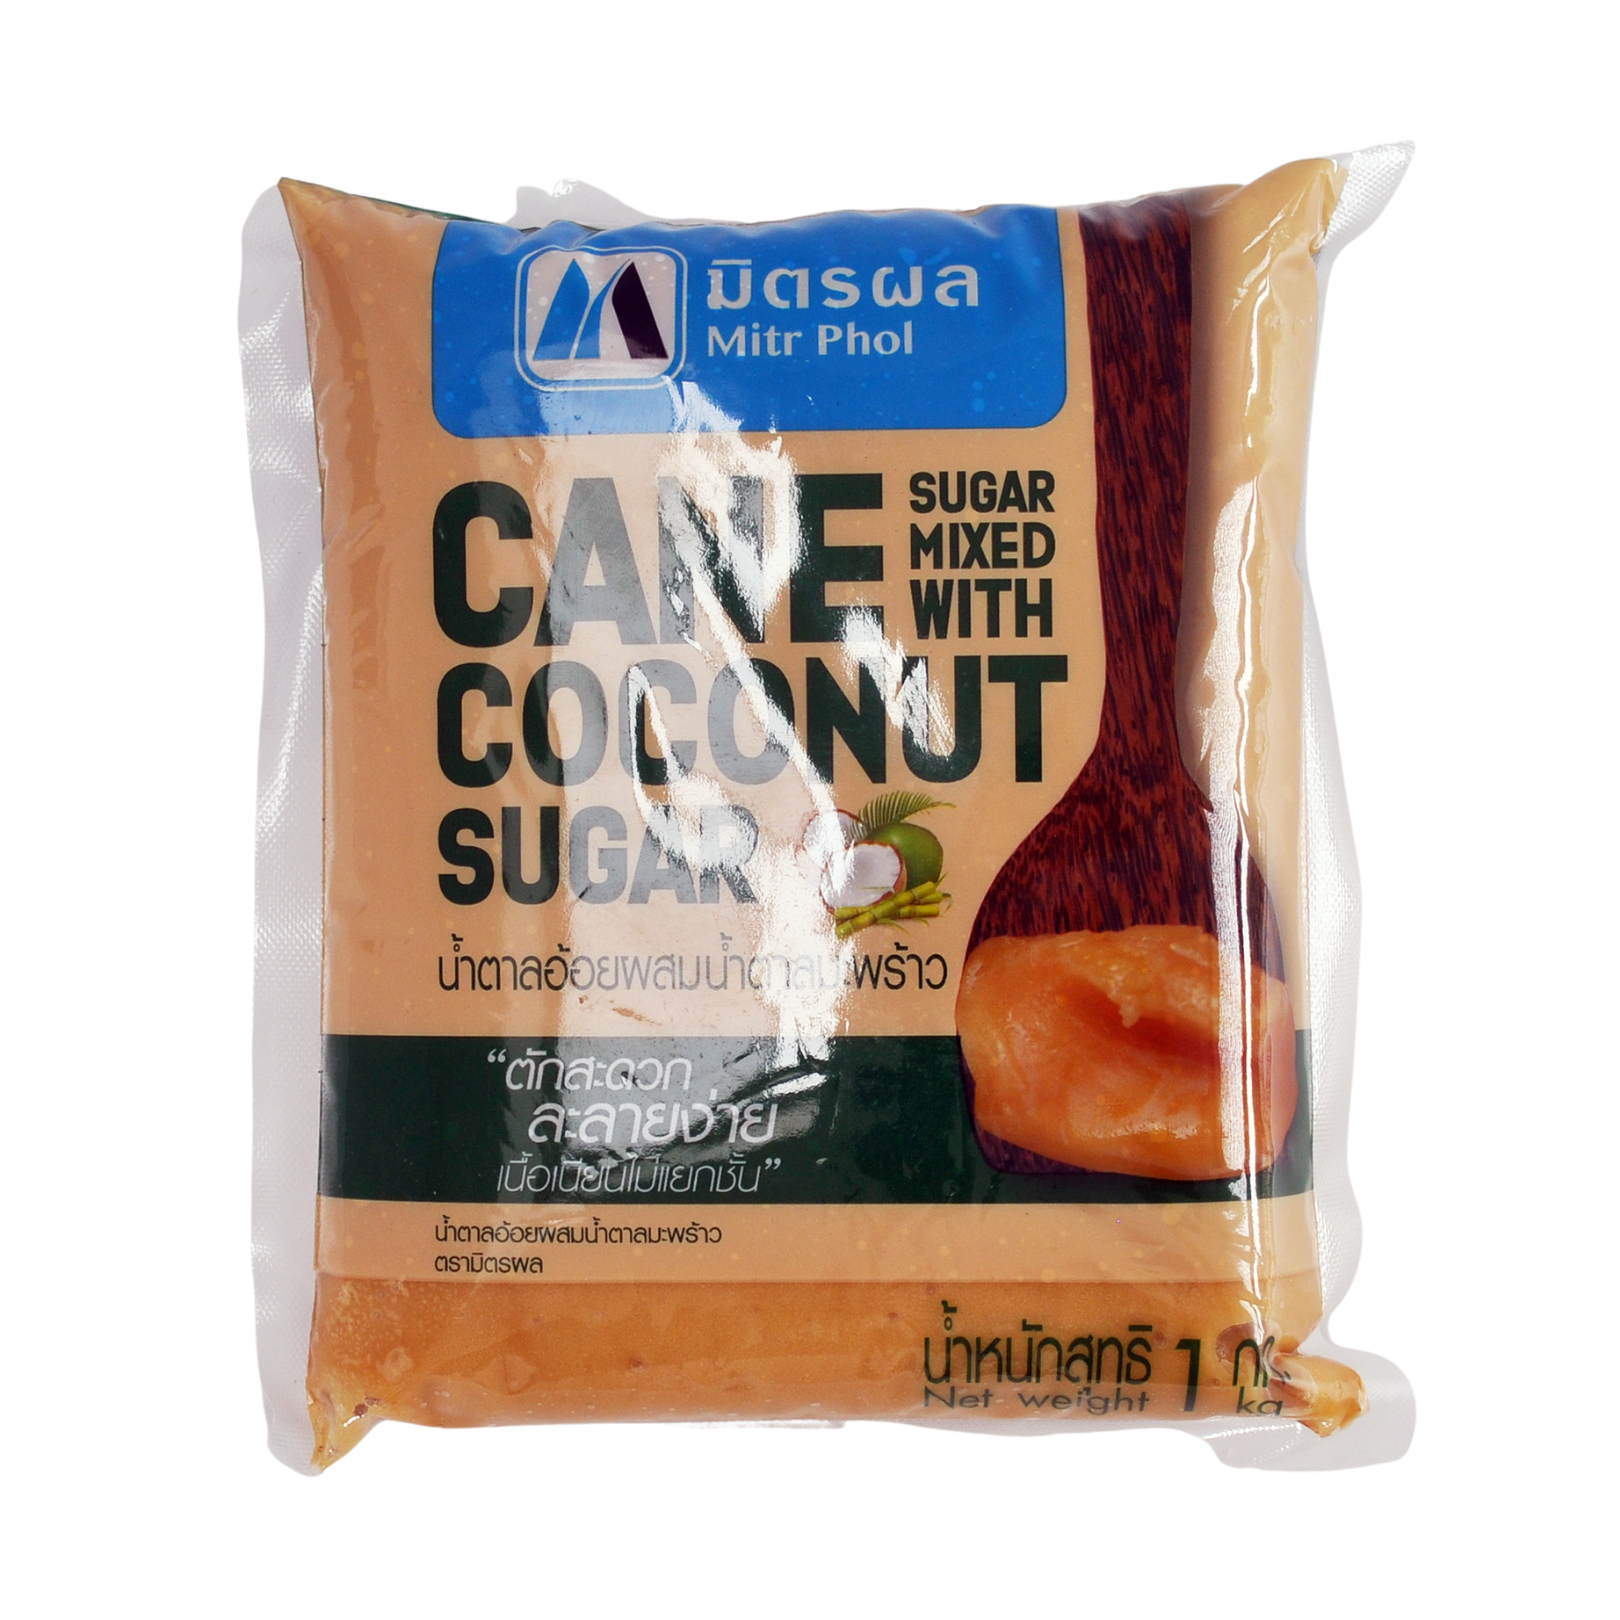 Cane Sugar Mixed with Coconut Sugar 1kg by Mitr Phol